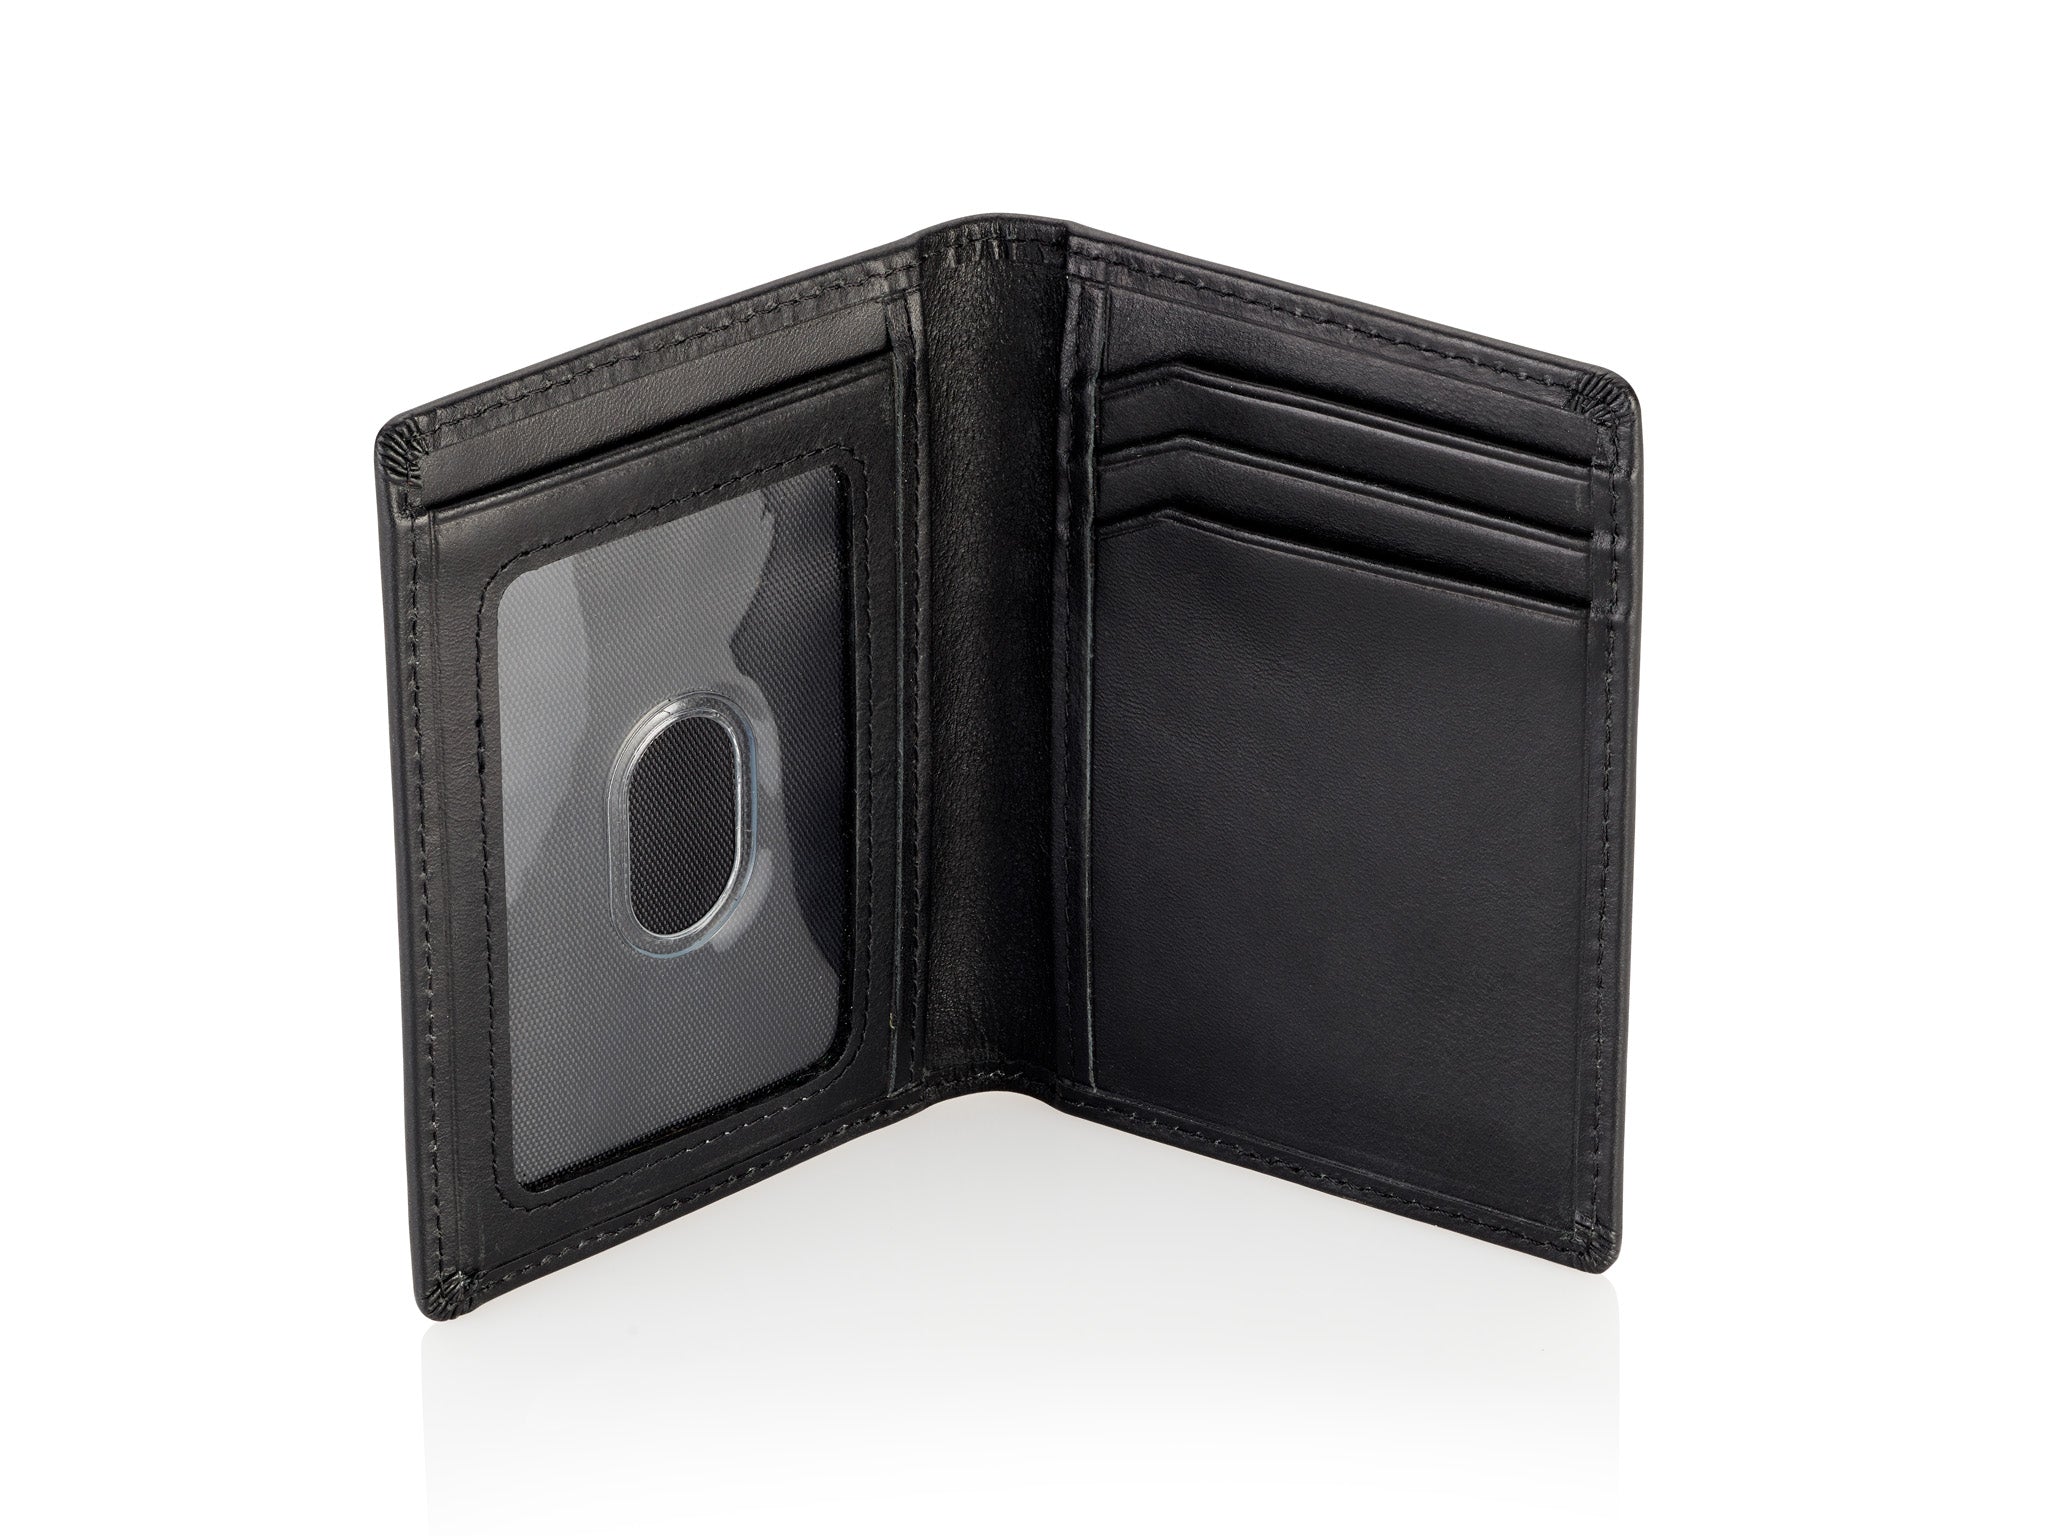 Men's Slim Front Pocket Wallet - RFID Blocking, Thin Minimalist